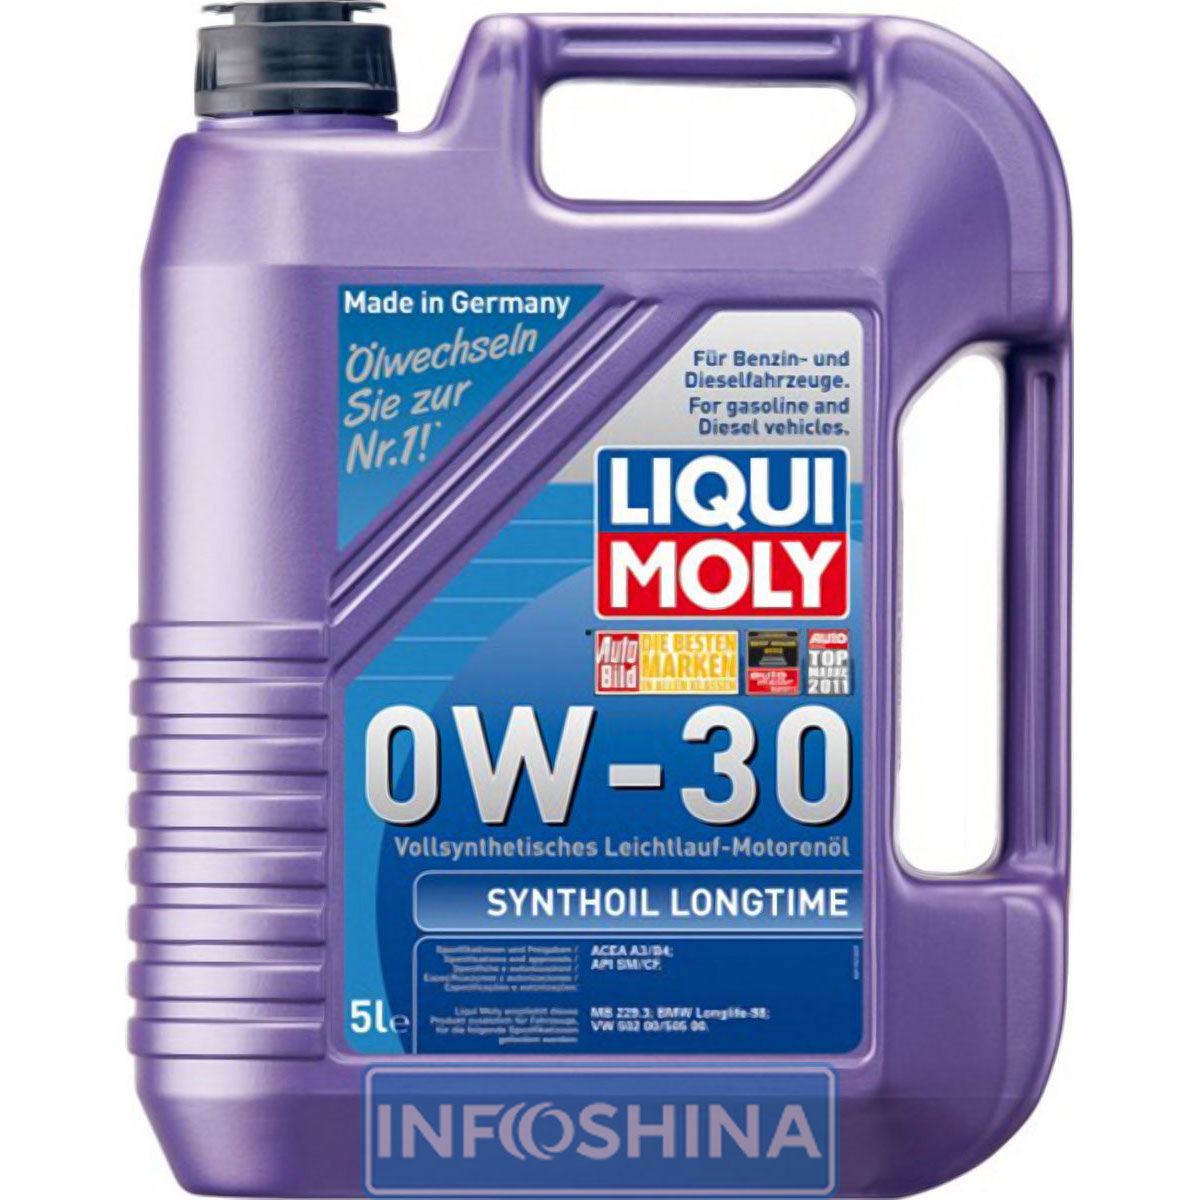 Купить масло Liqui Moly Synthoil Longtime 0W-30 (5л)